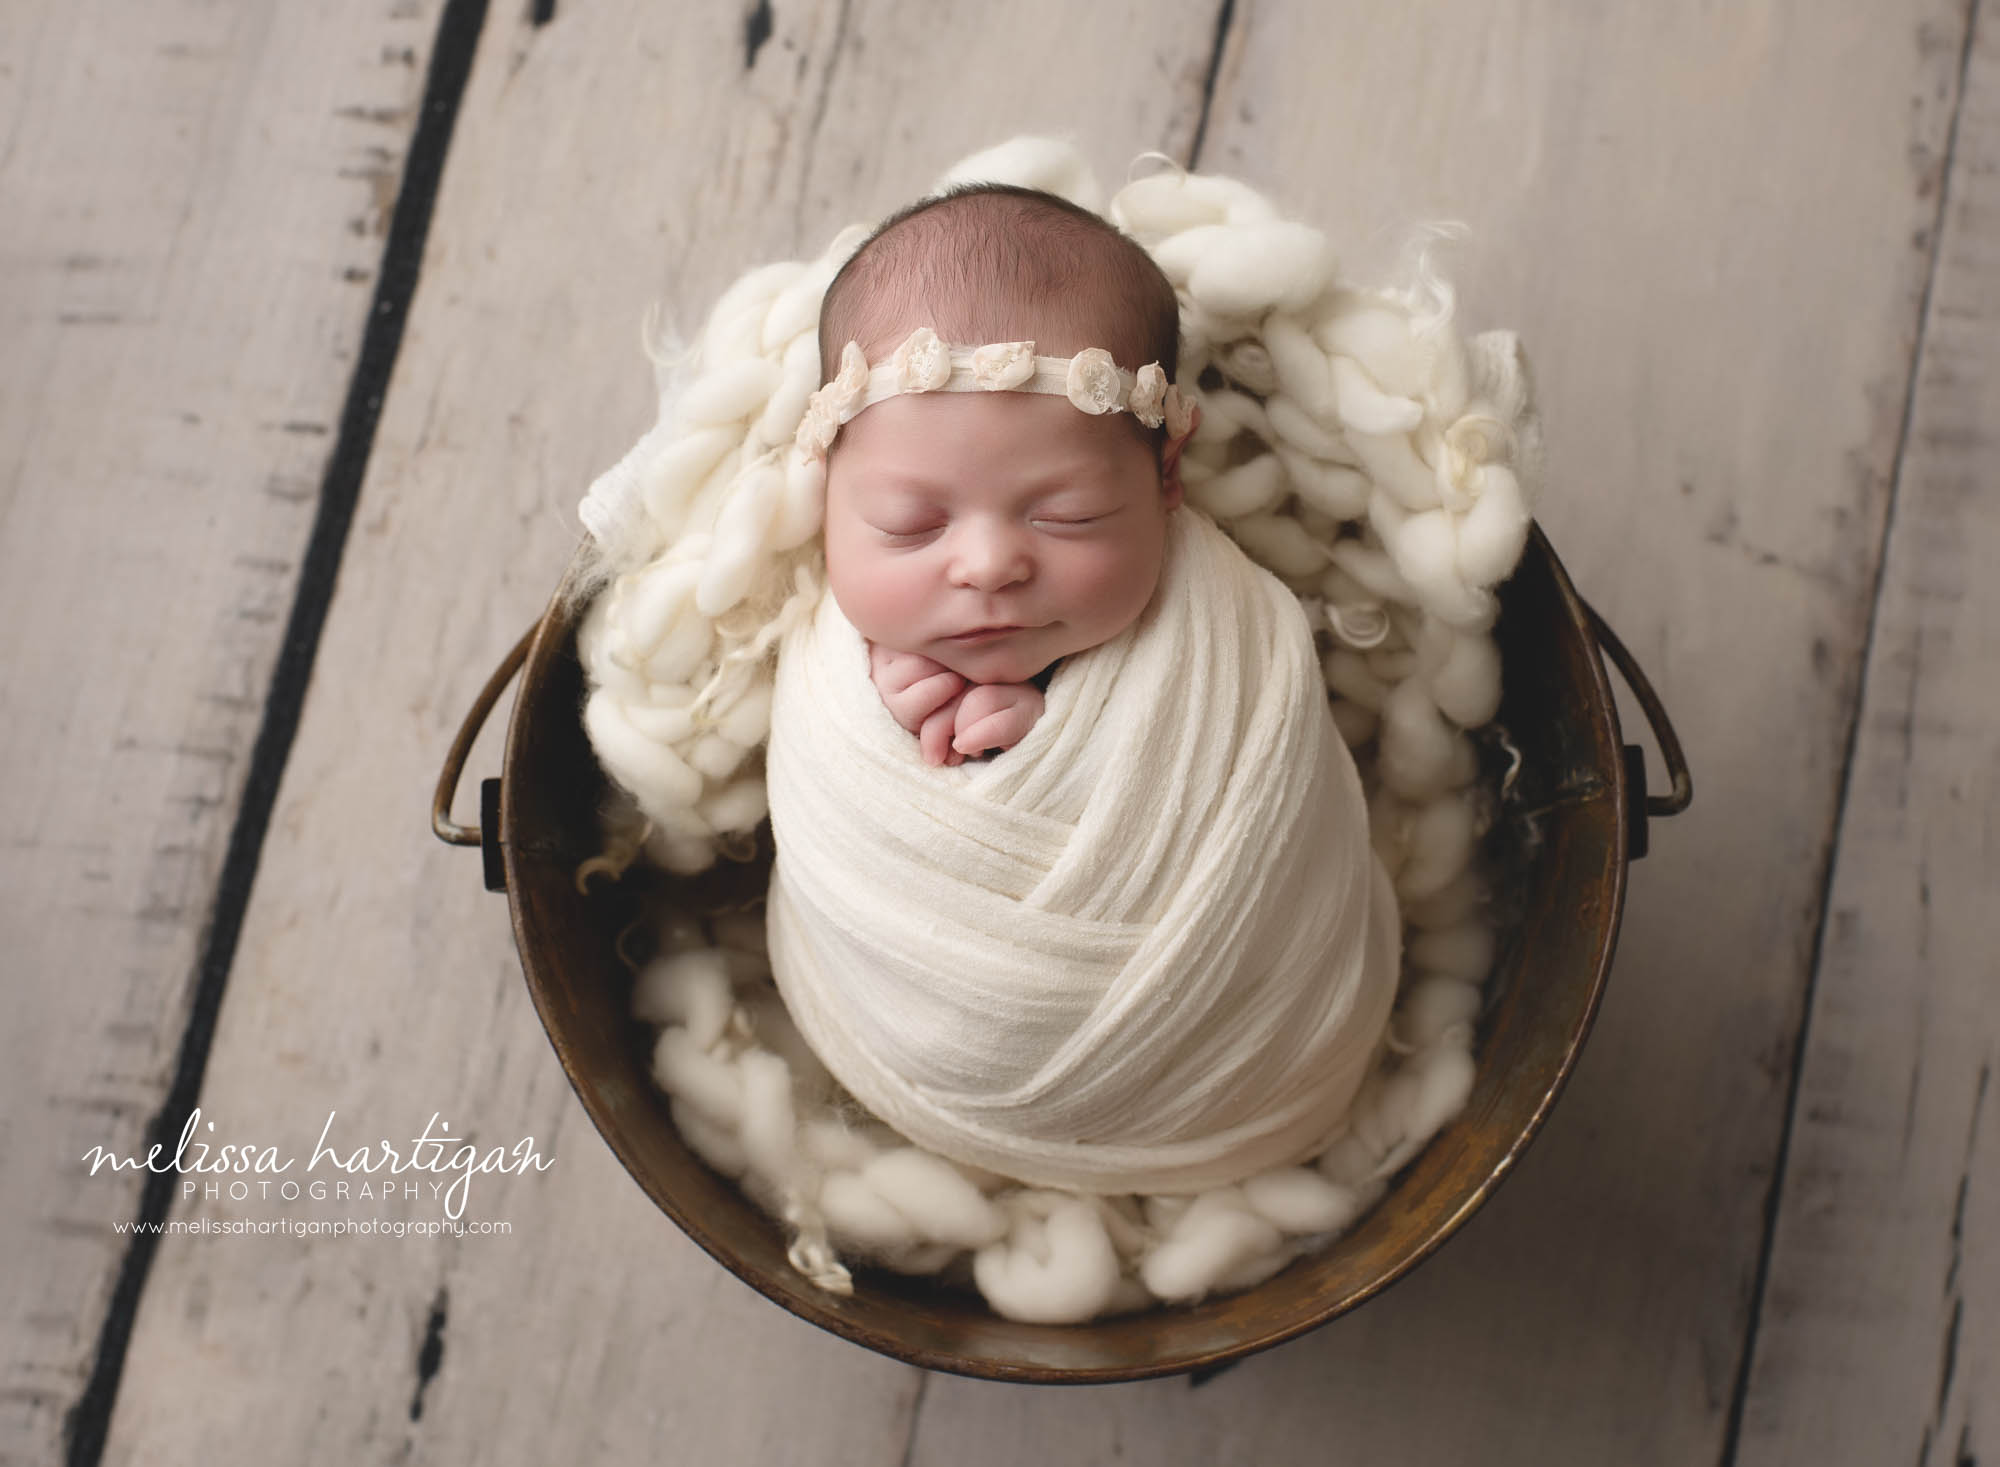 Baby girl wrappe din white wrap with flower headband CT newborn Photographer